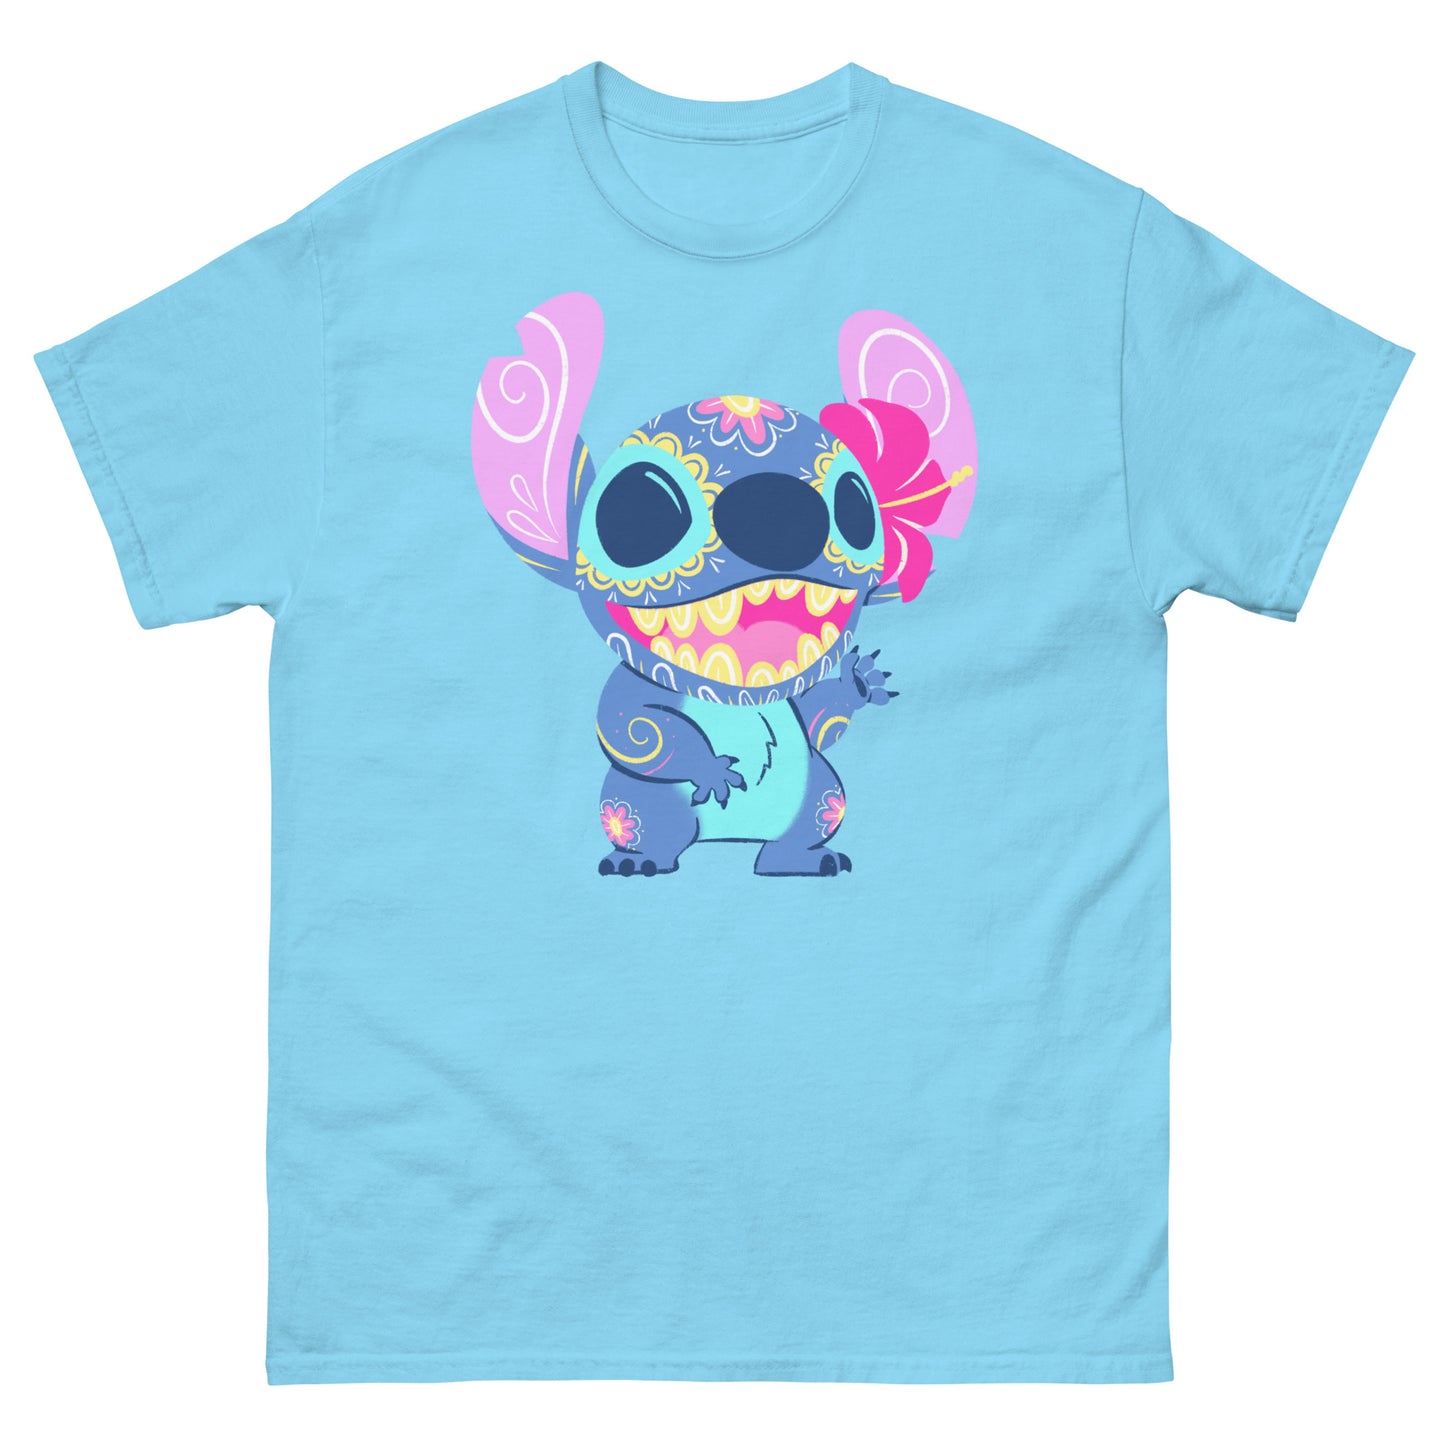 Stitch - Lilo & Stitch - PopMuertos Sugar Skull T-Shirt